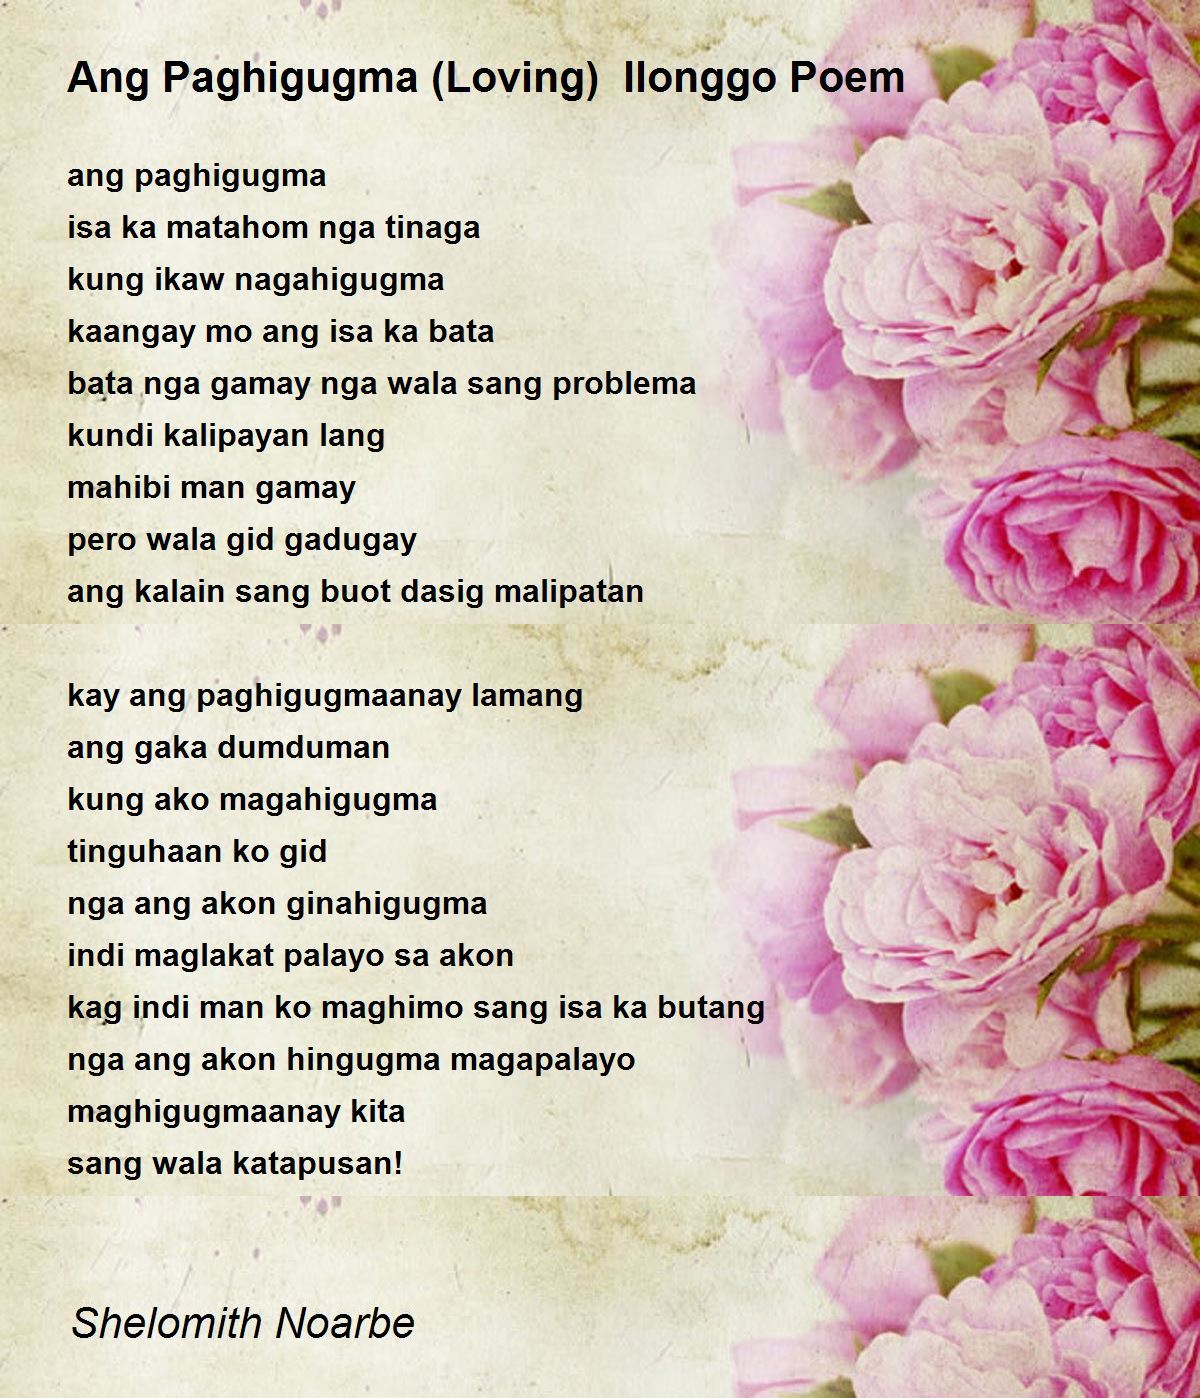 Ang Paghigugma (Loving) Ilonggo Poem Poem by Shelomith Noarbe - Poem